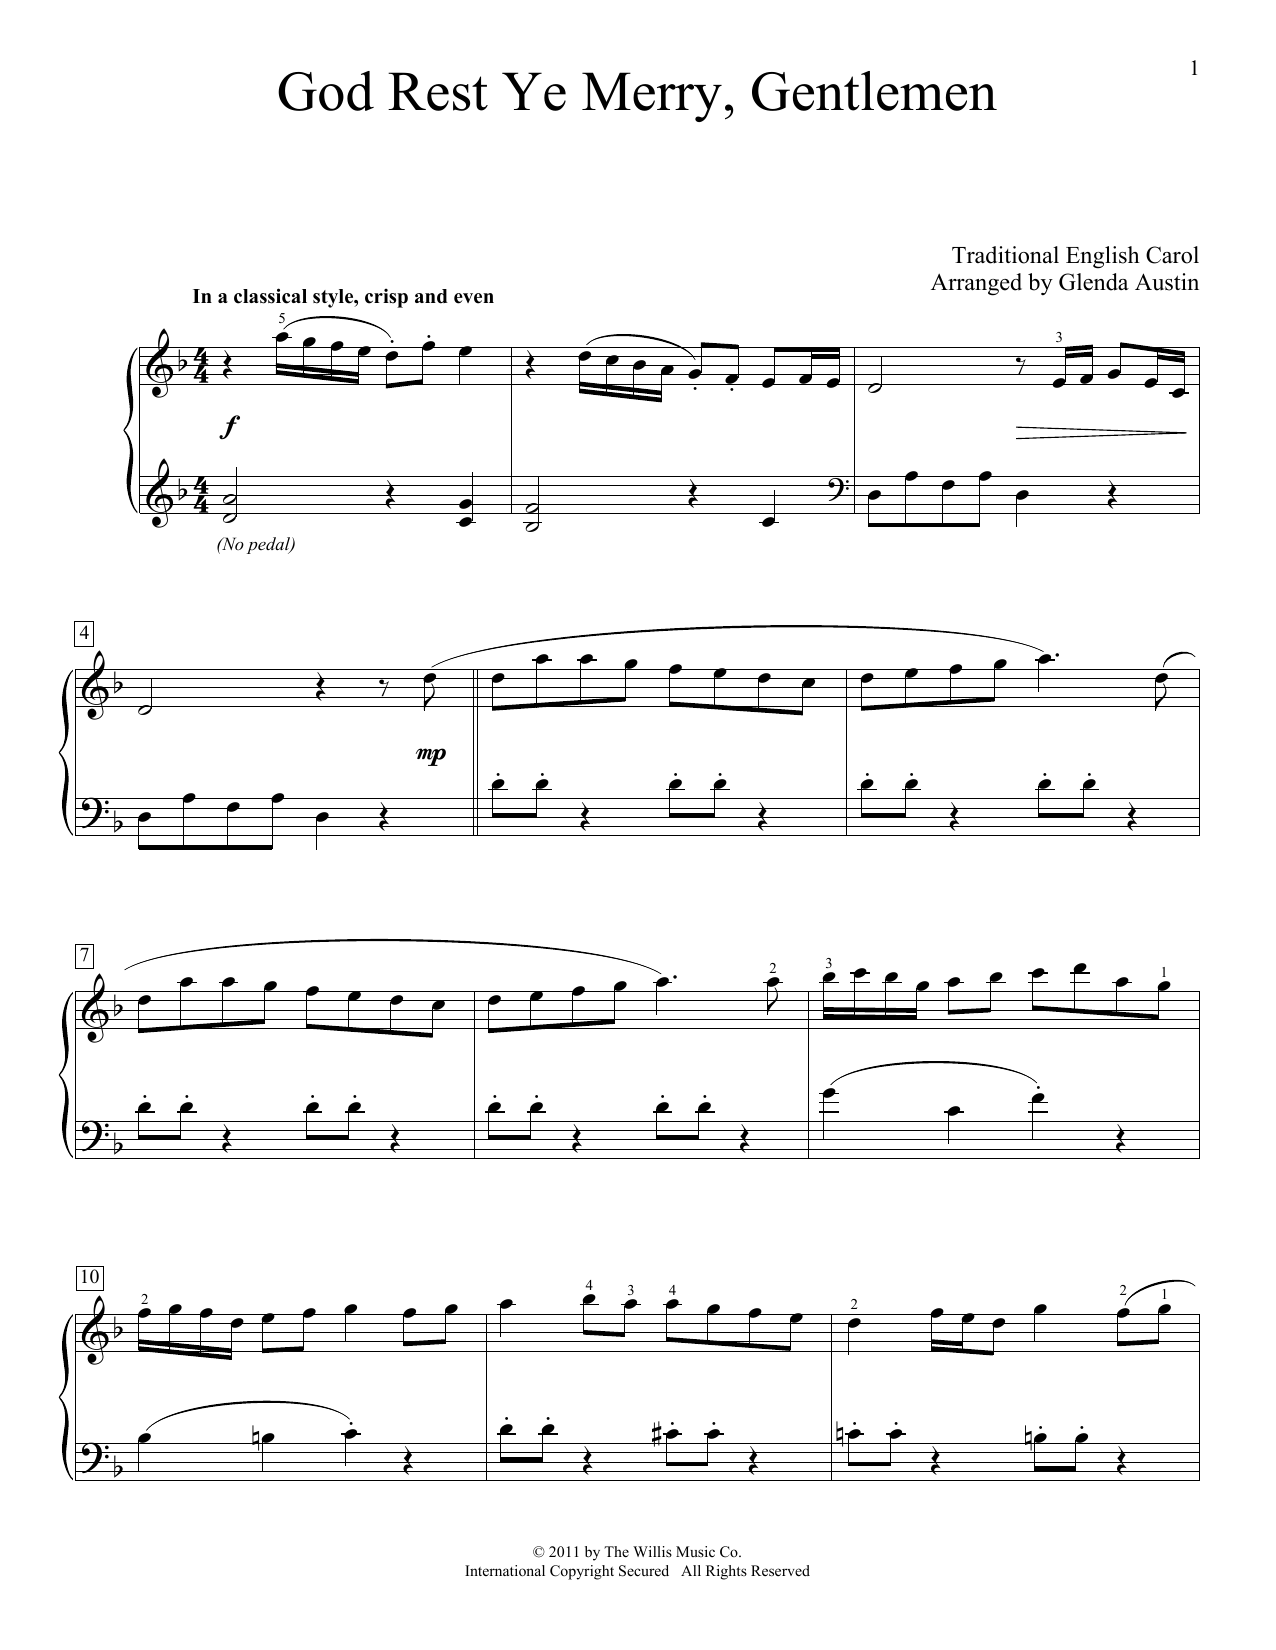 Traditional English Carol God Rest Ye Merry, Gentlemen (arr. Glenda Austin) Sheet Music Notes & Chords for Piano Solo - Download or Print PDF